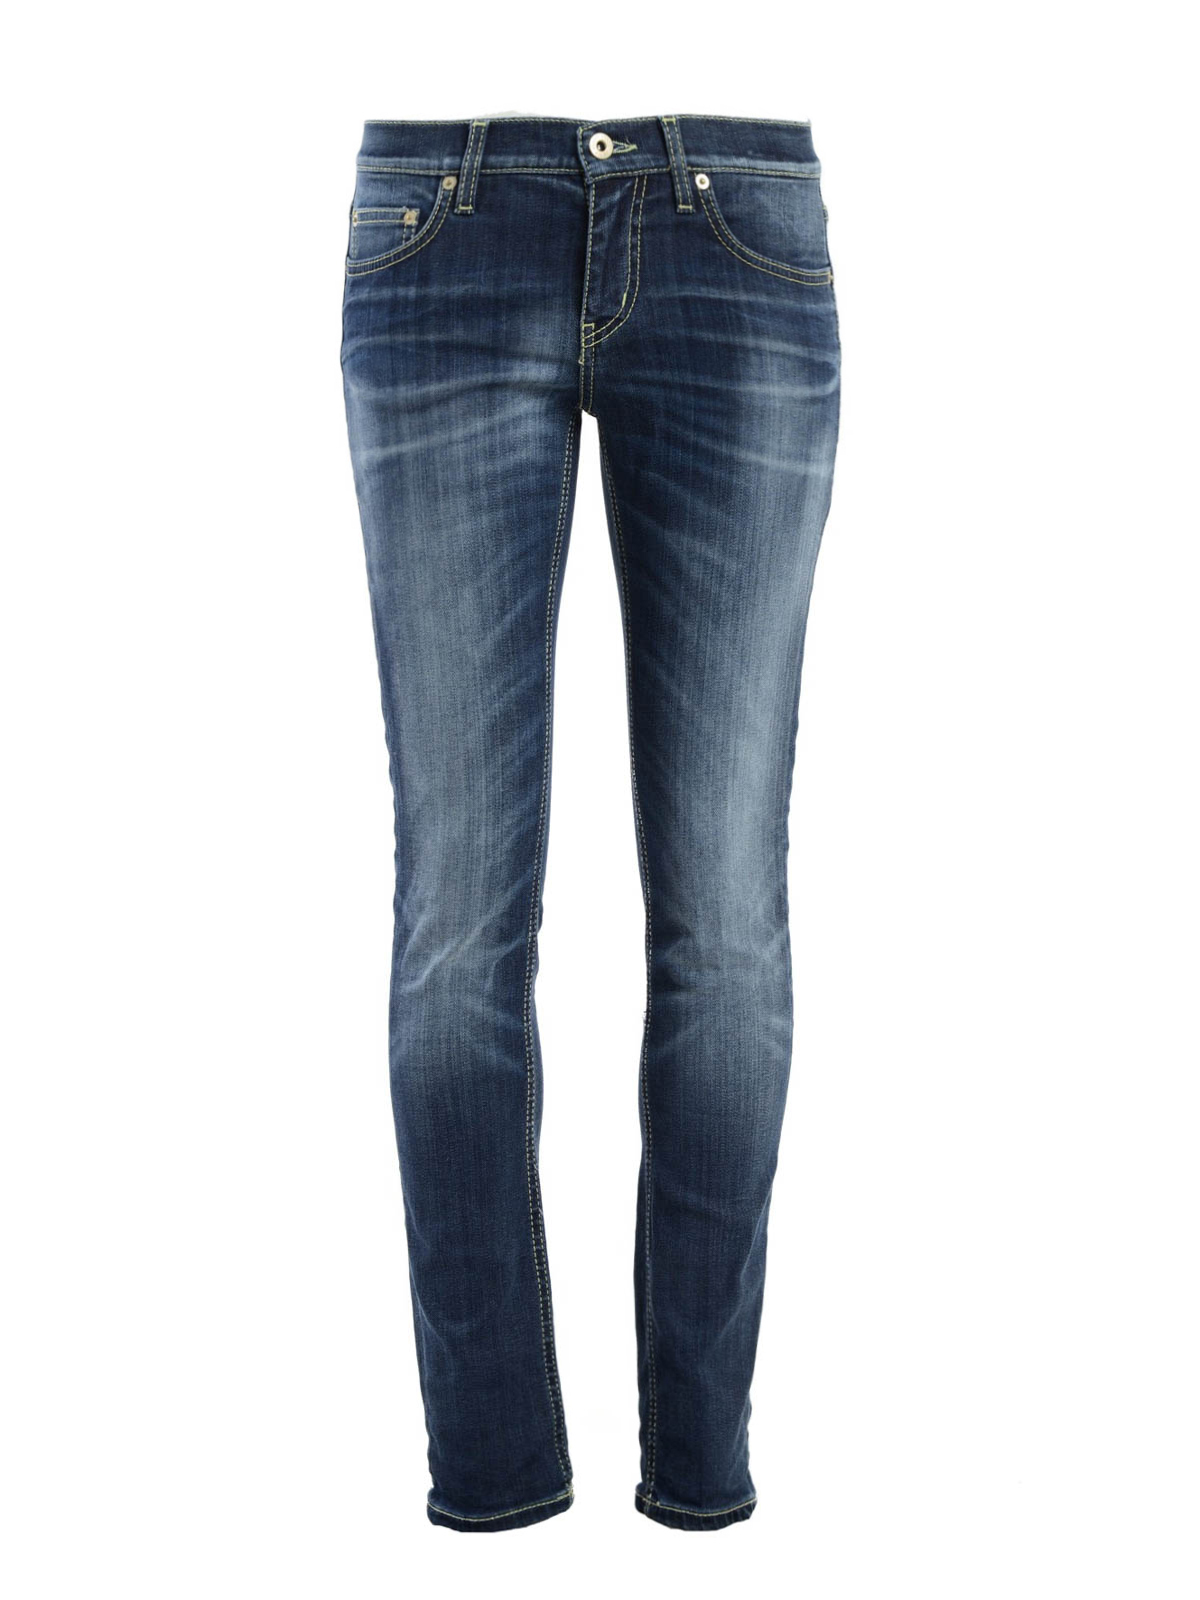 Skinny jeans Dondup - Joey jeans - P998DS112D800 | Shop online at iKRIX